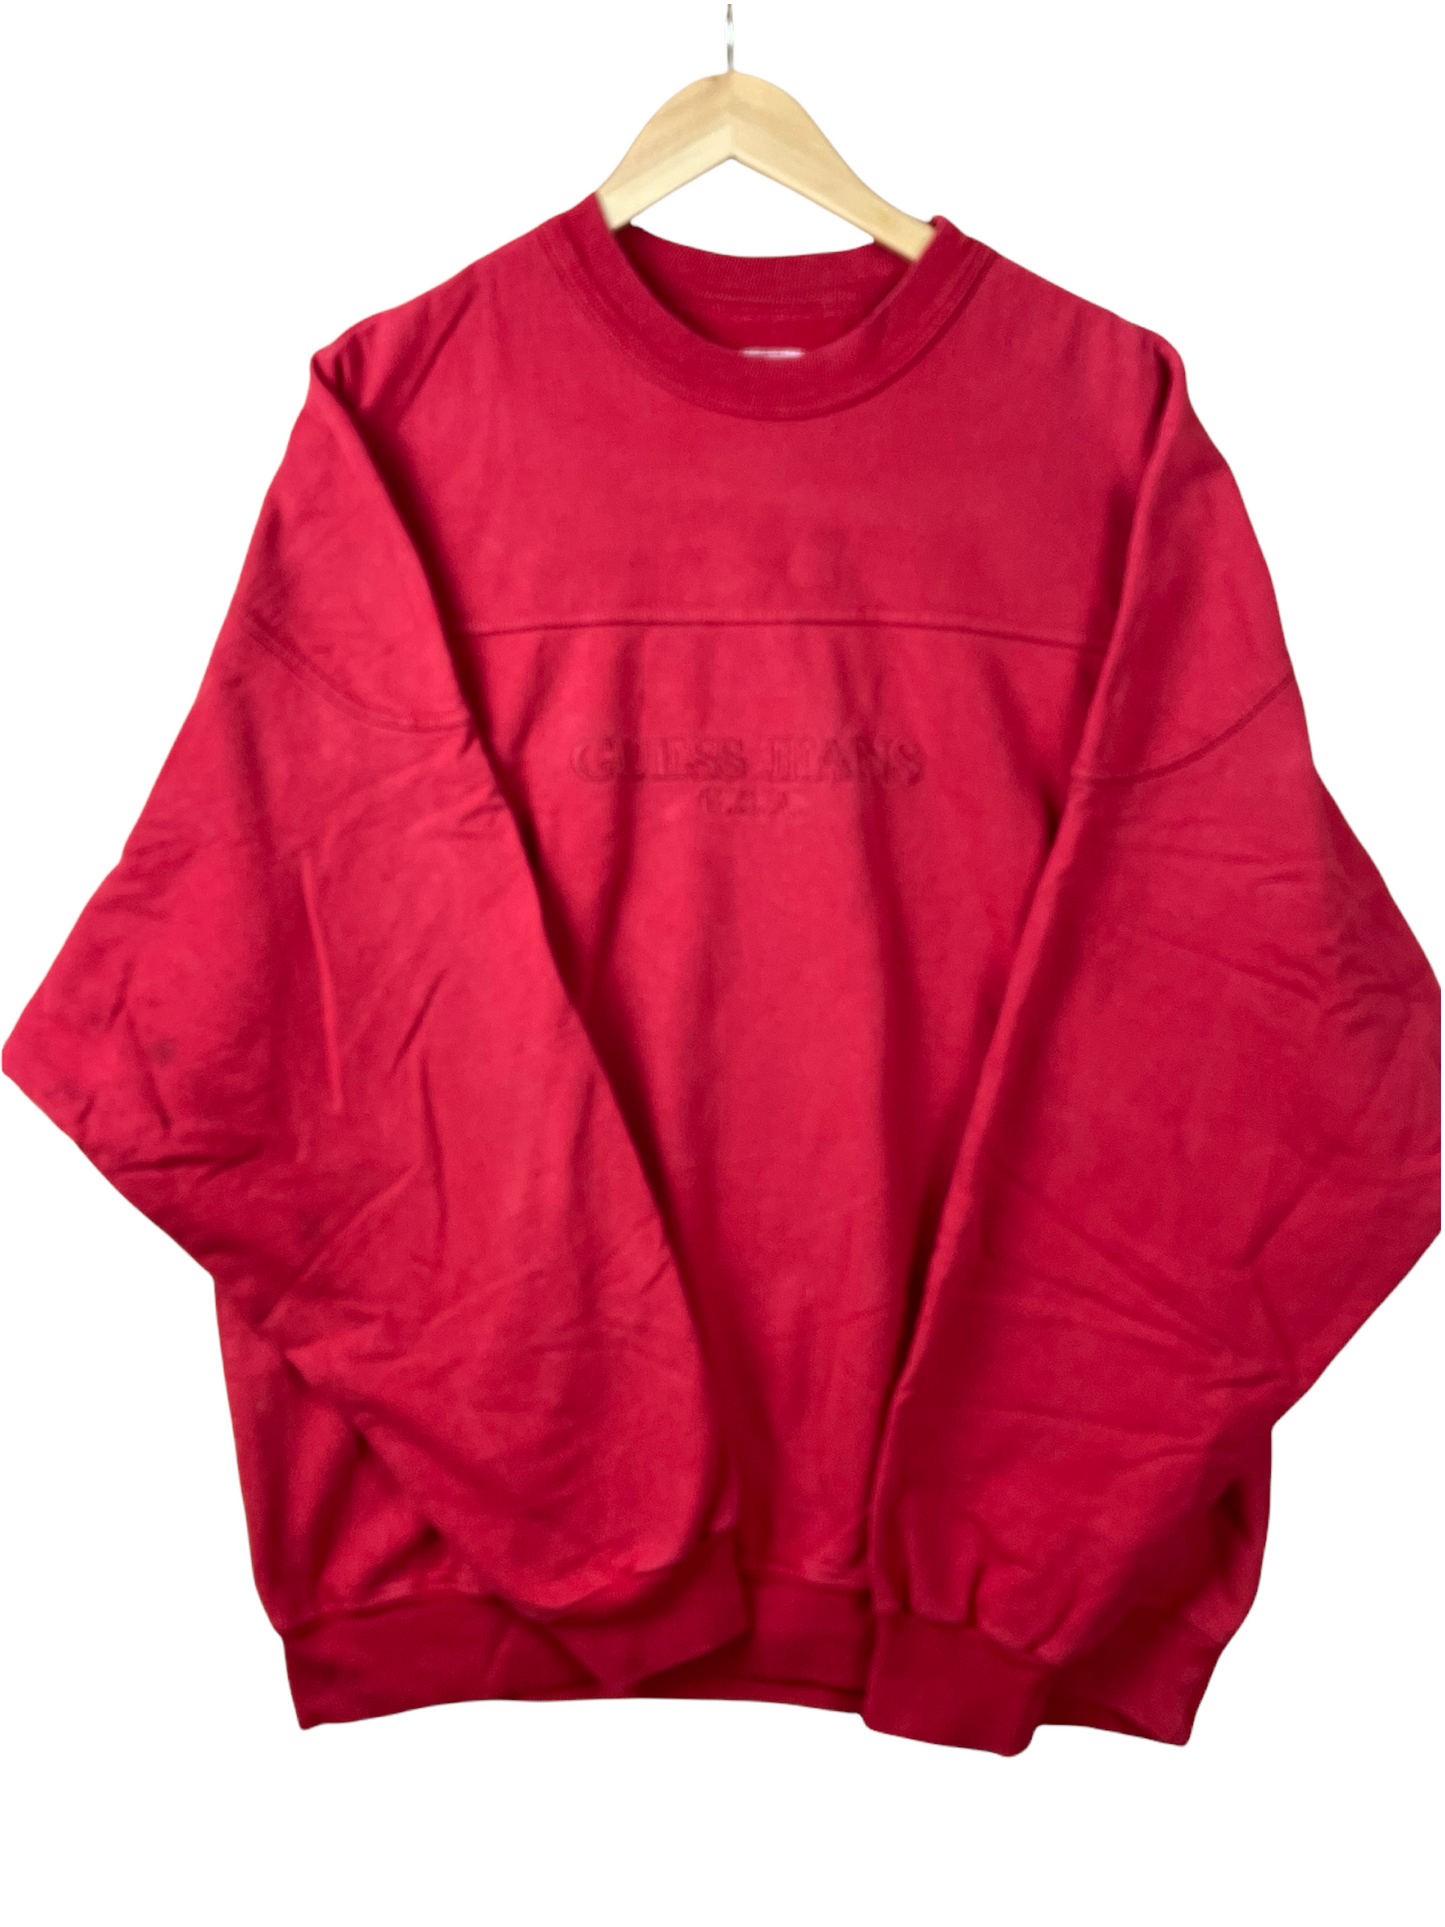 90s Guess Sweatshirt Red L